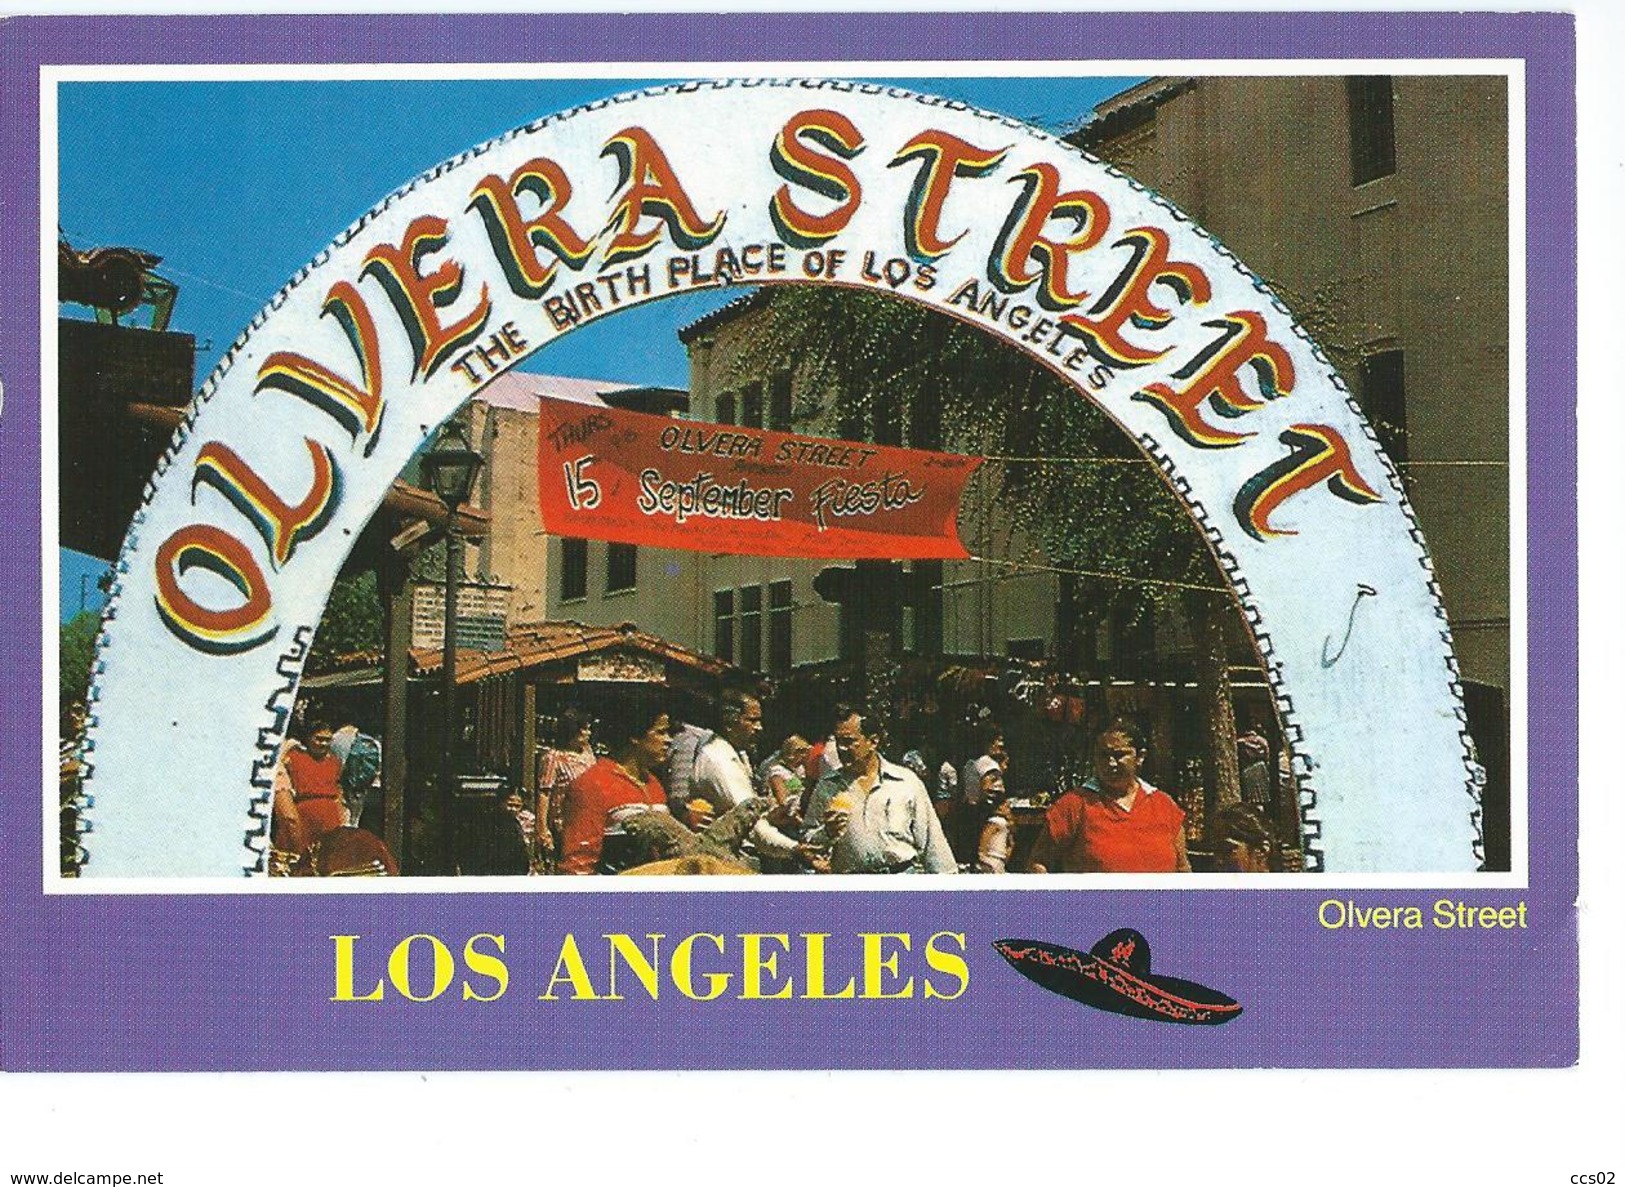 Los Angeles Olvera Street - Los Angeles